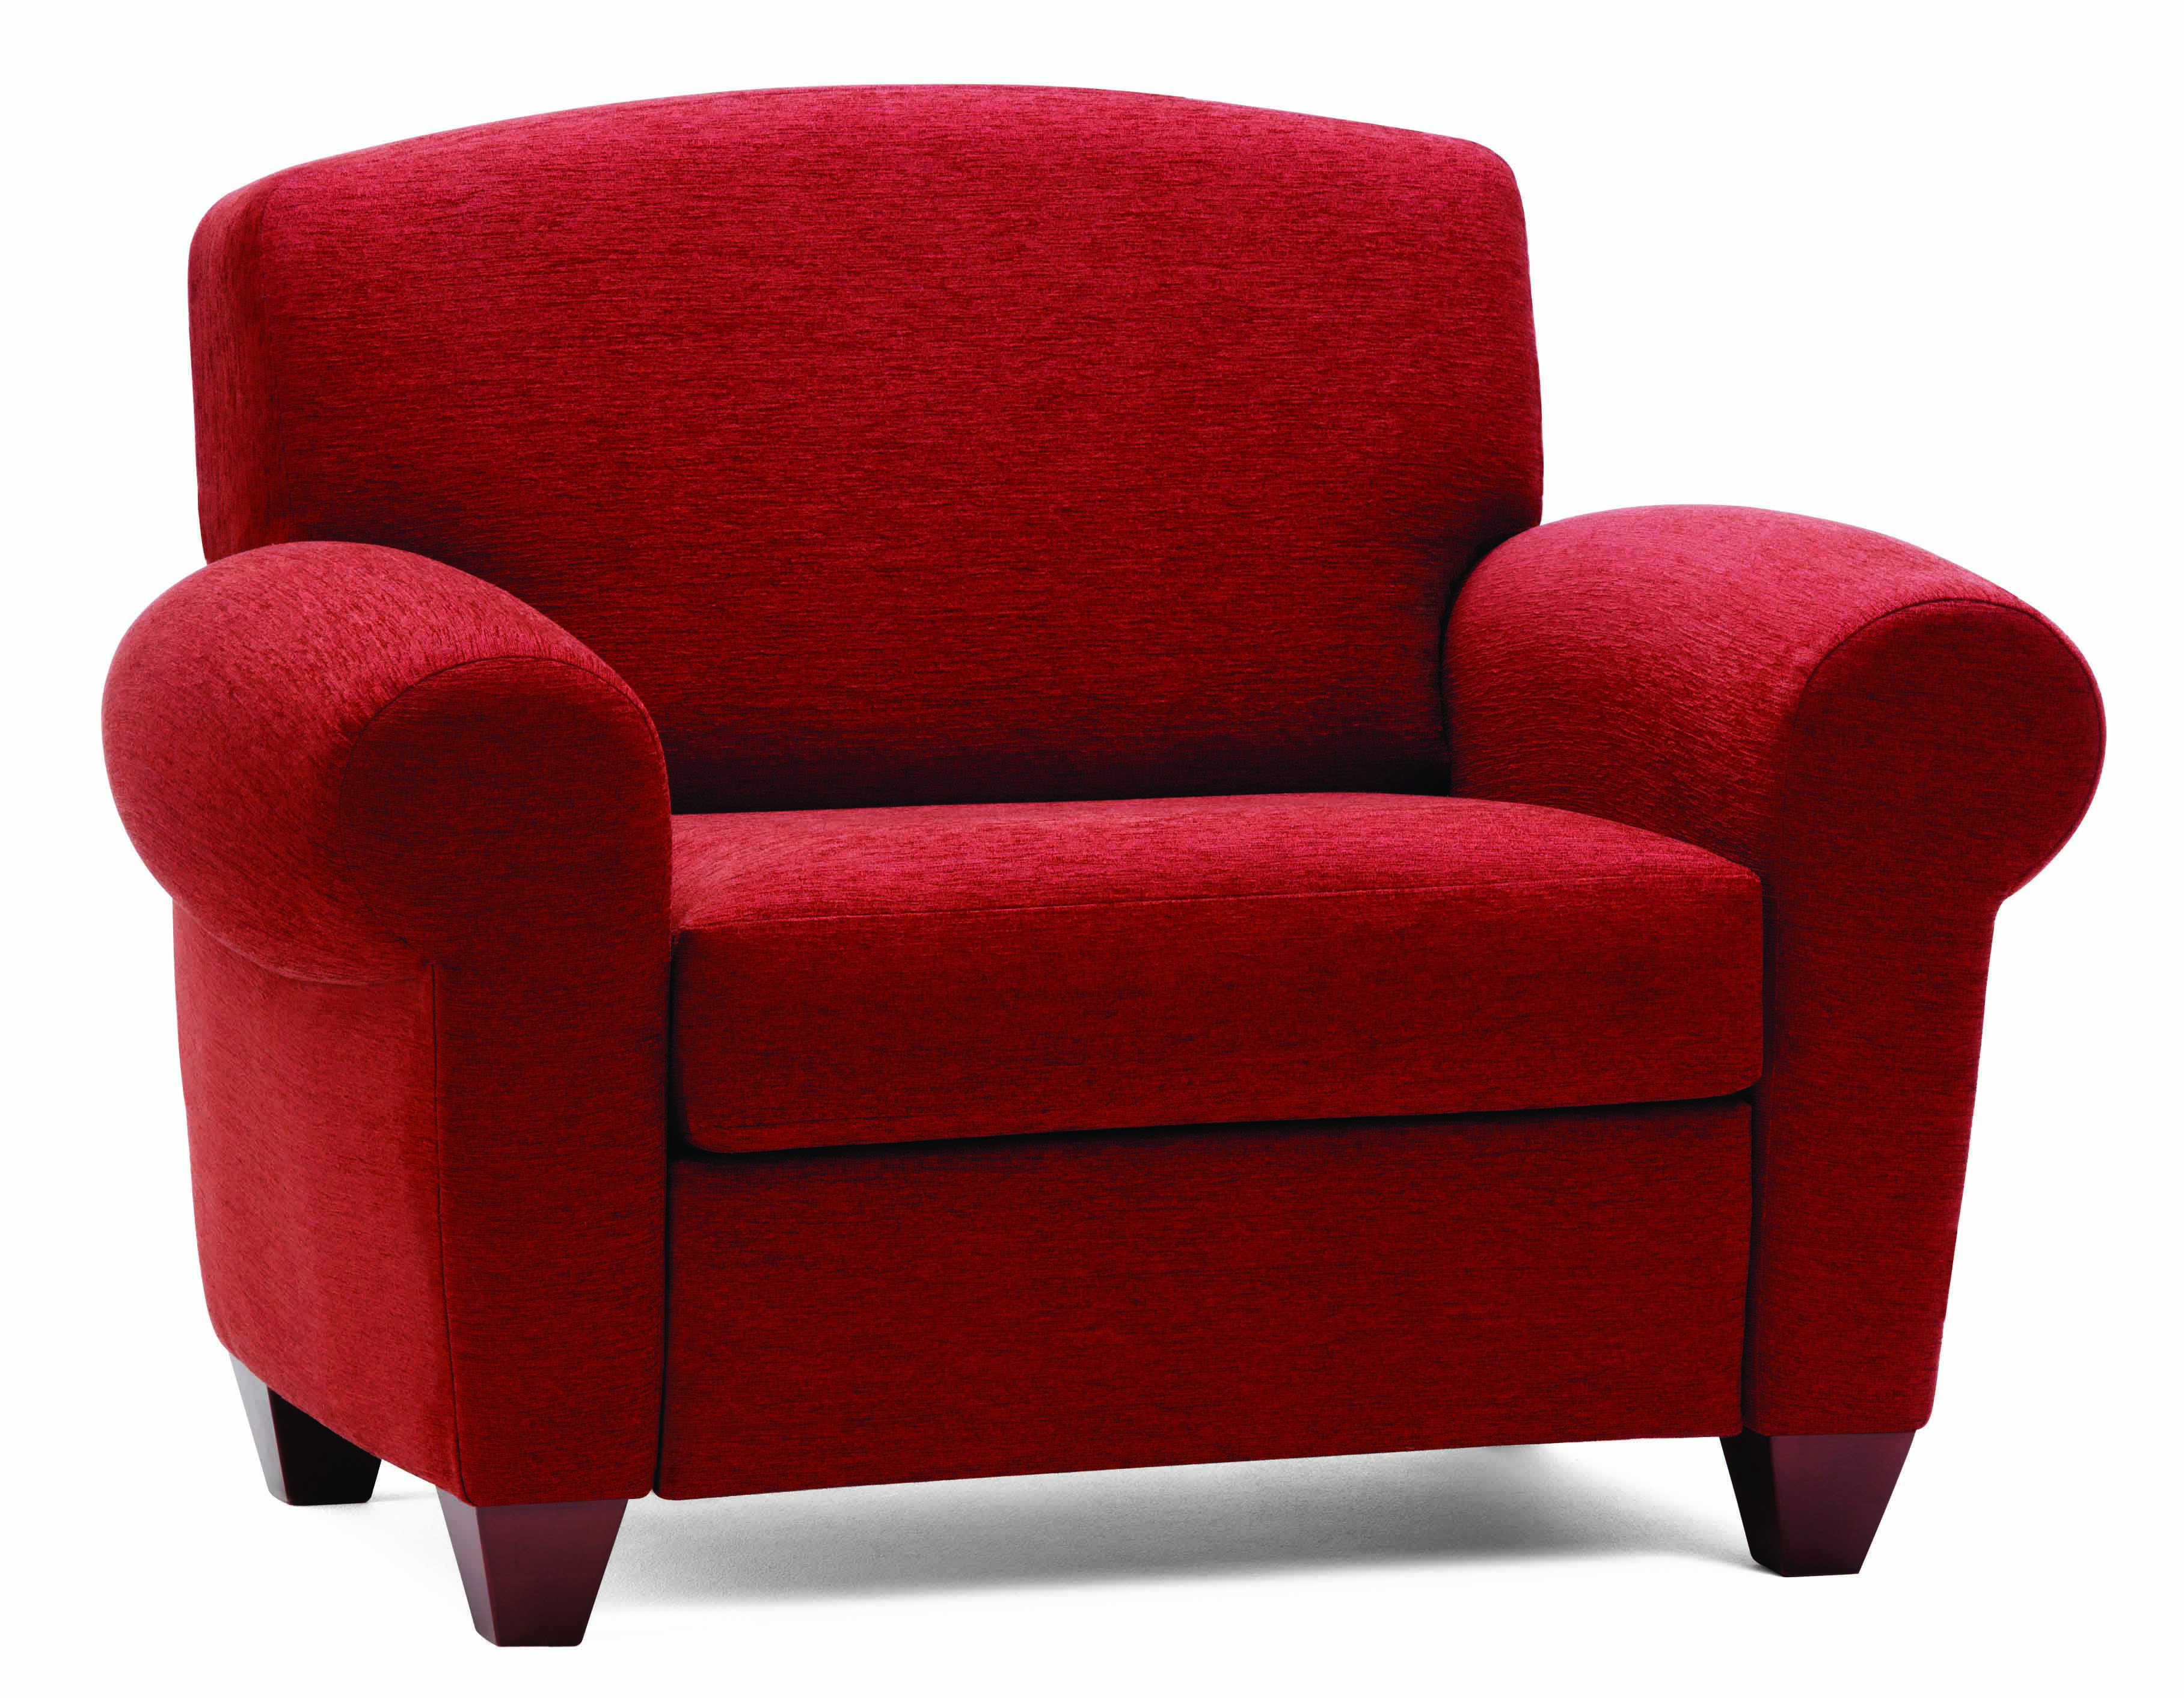 Soirée Oversize Chair - Red